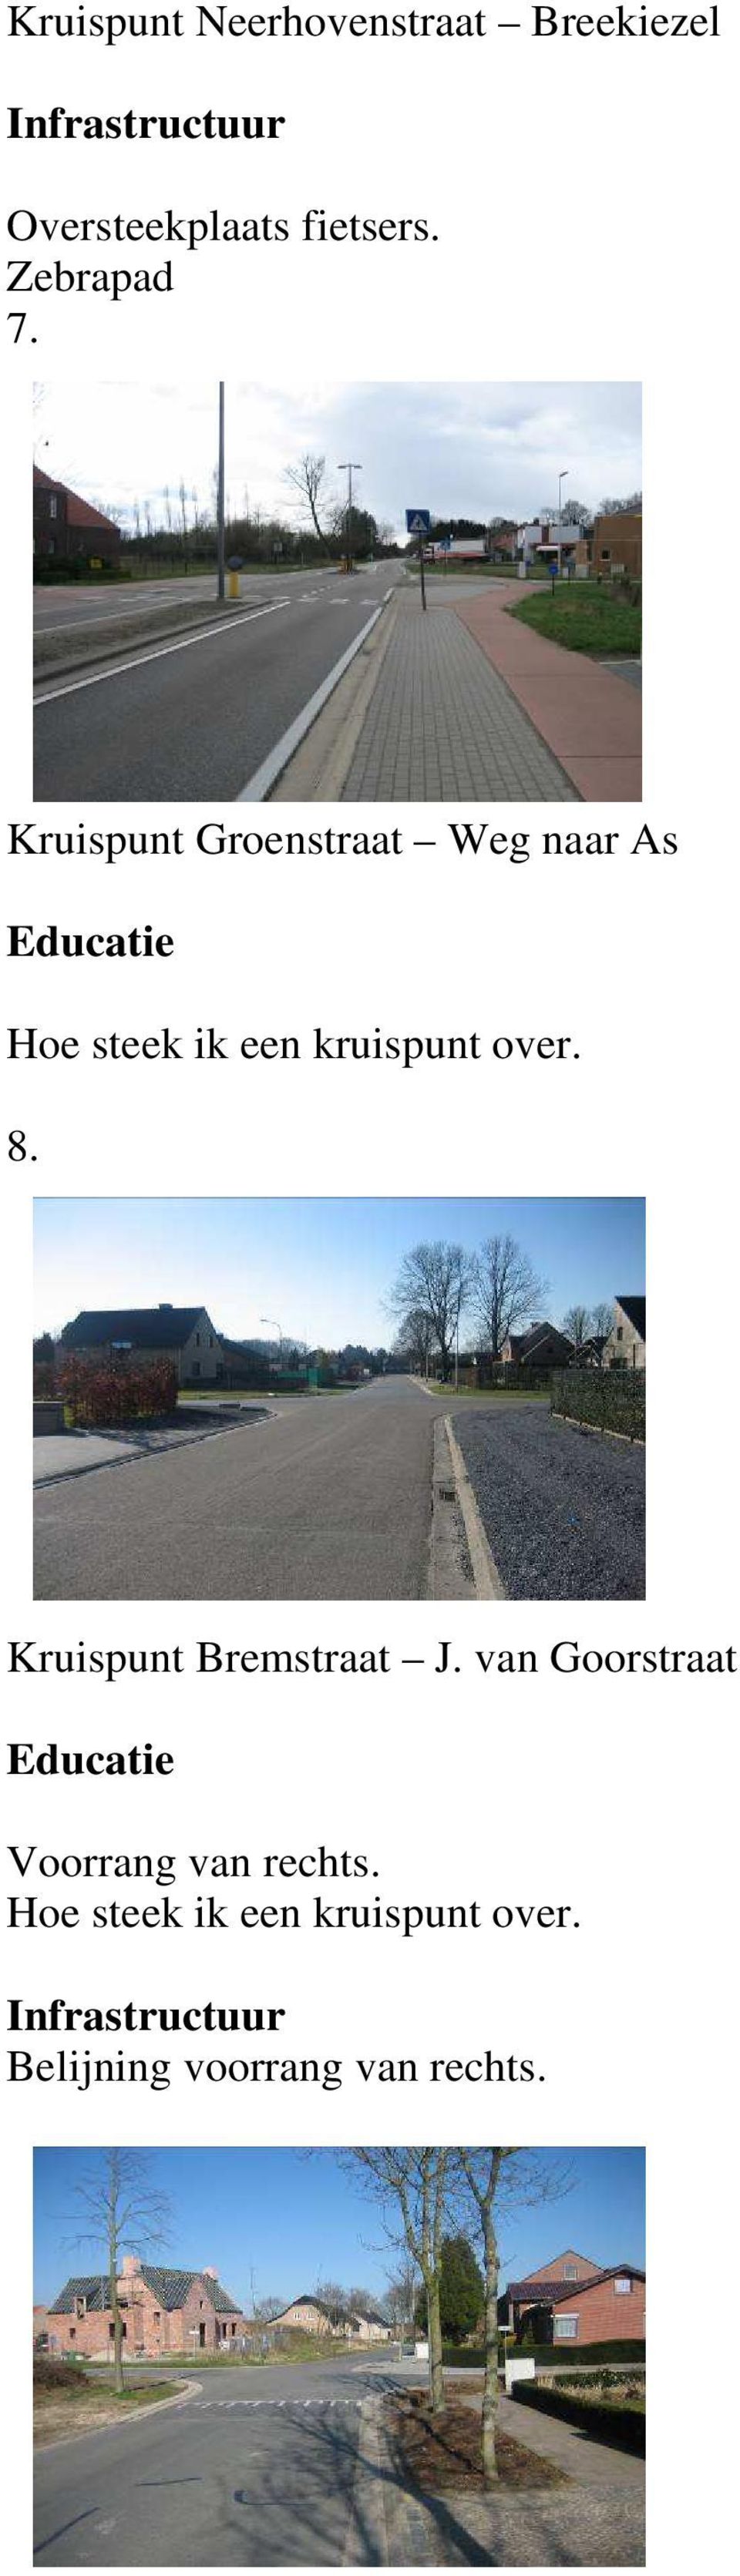 Kruispunt Groenstraat Weg naar As Educatie 8.